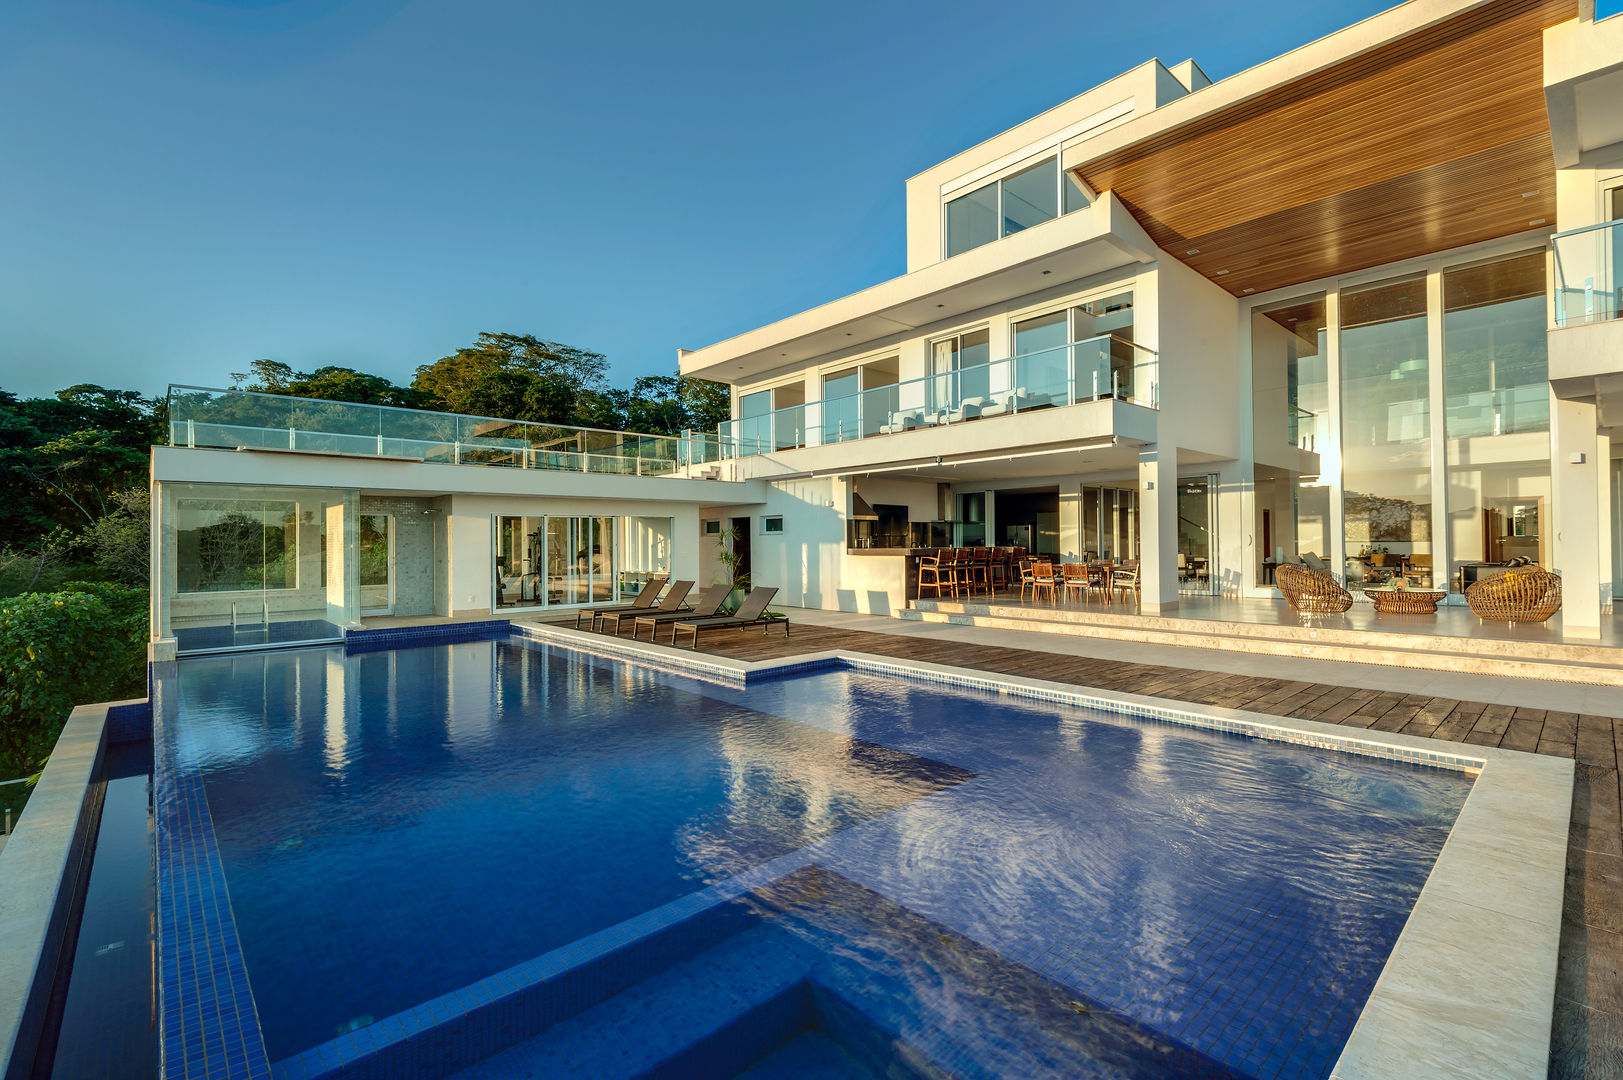 casa da colina dayala e rafael arquitetos associados Piscinas modernas piscina pool